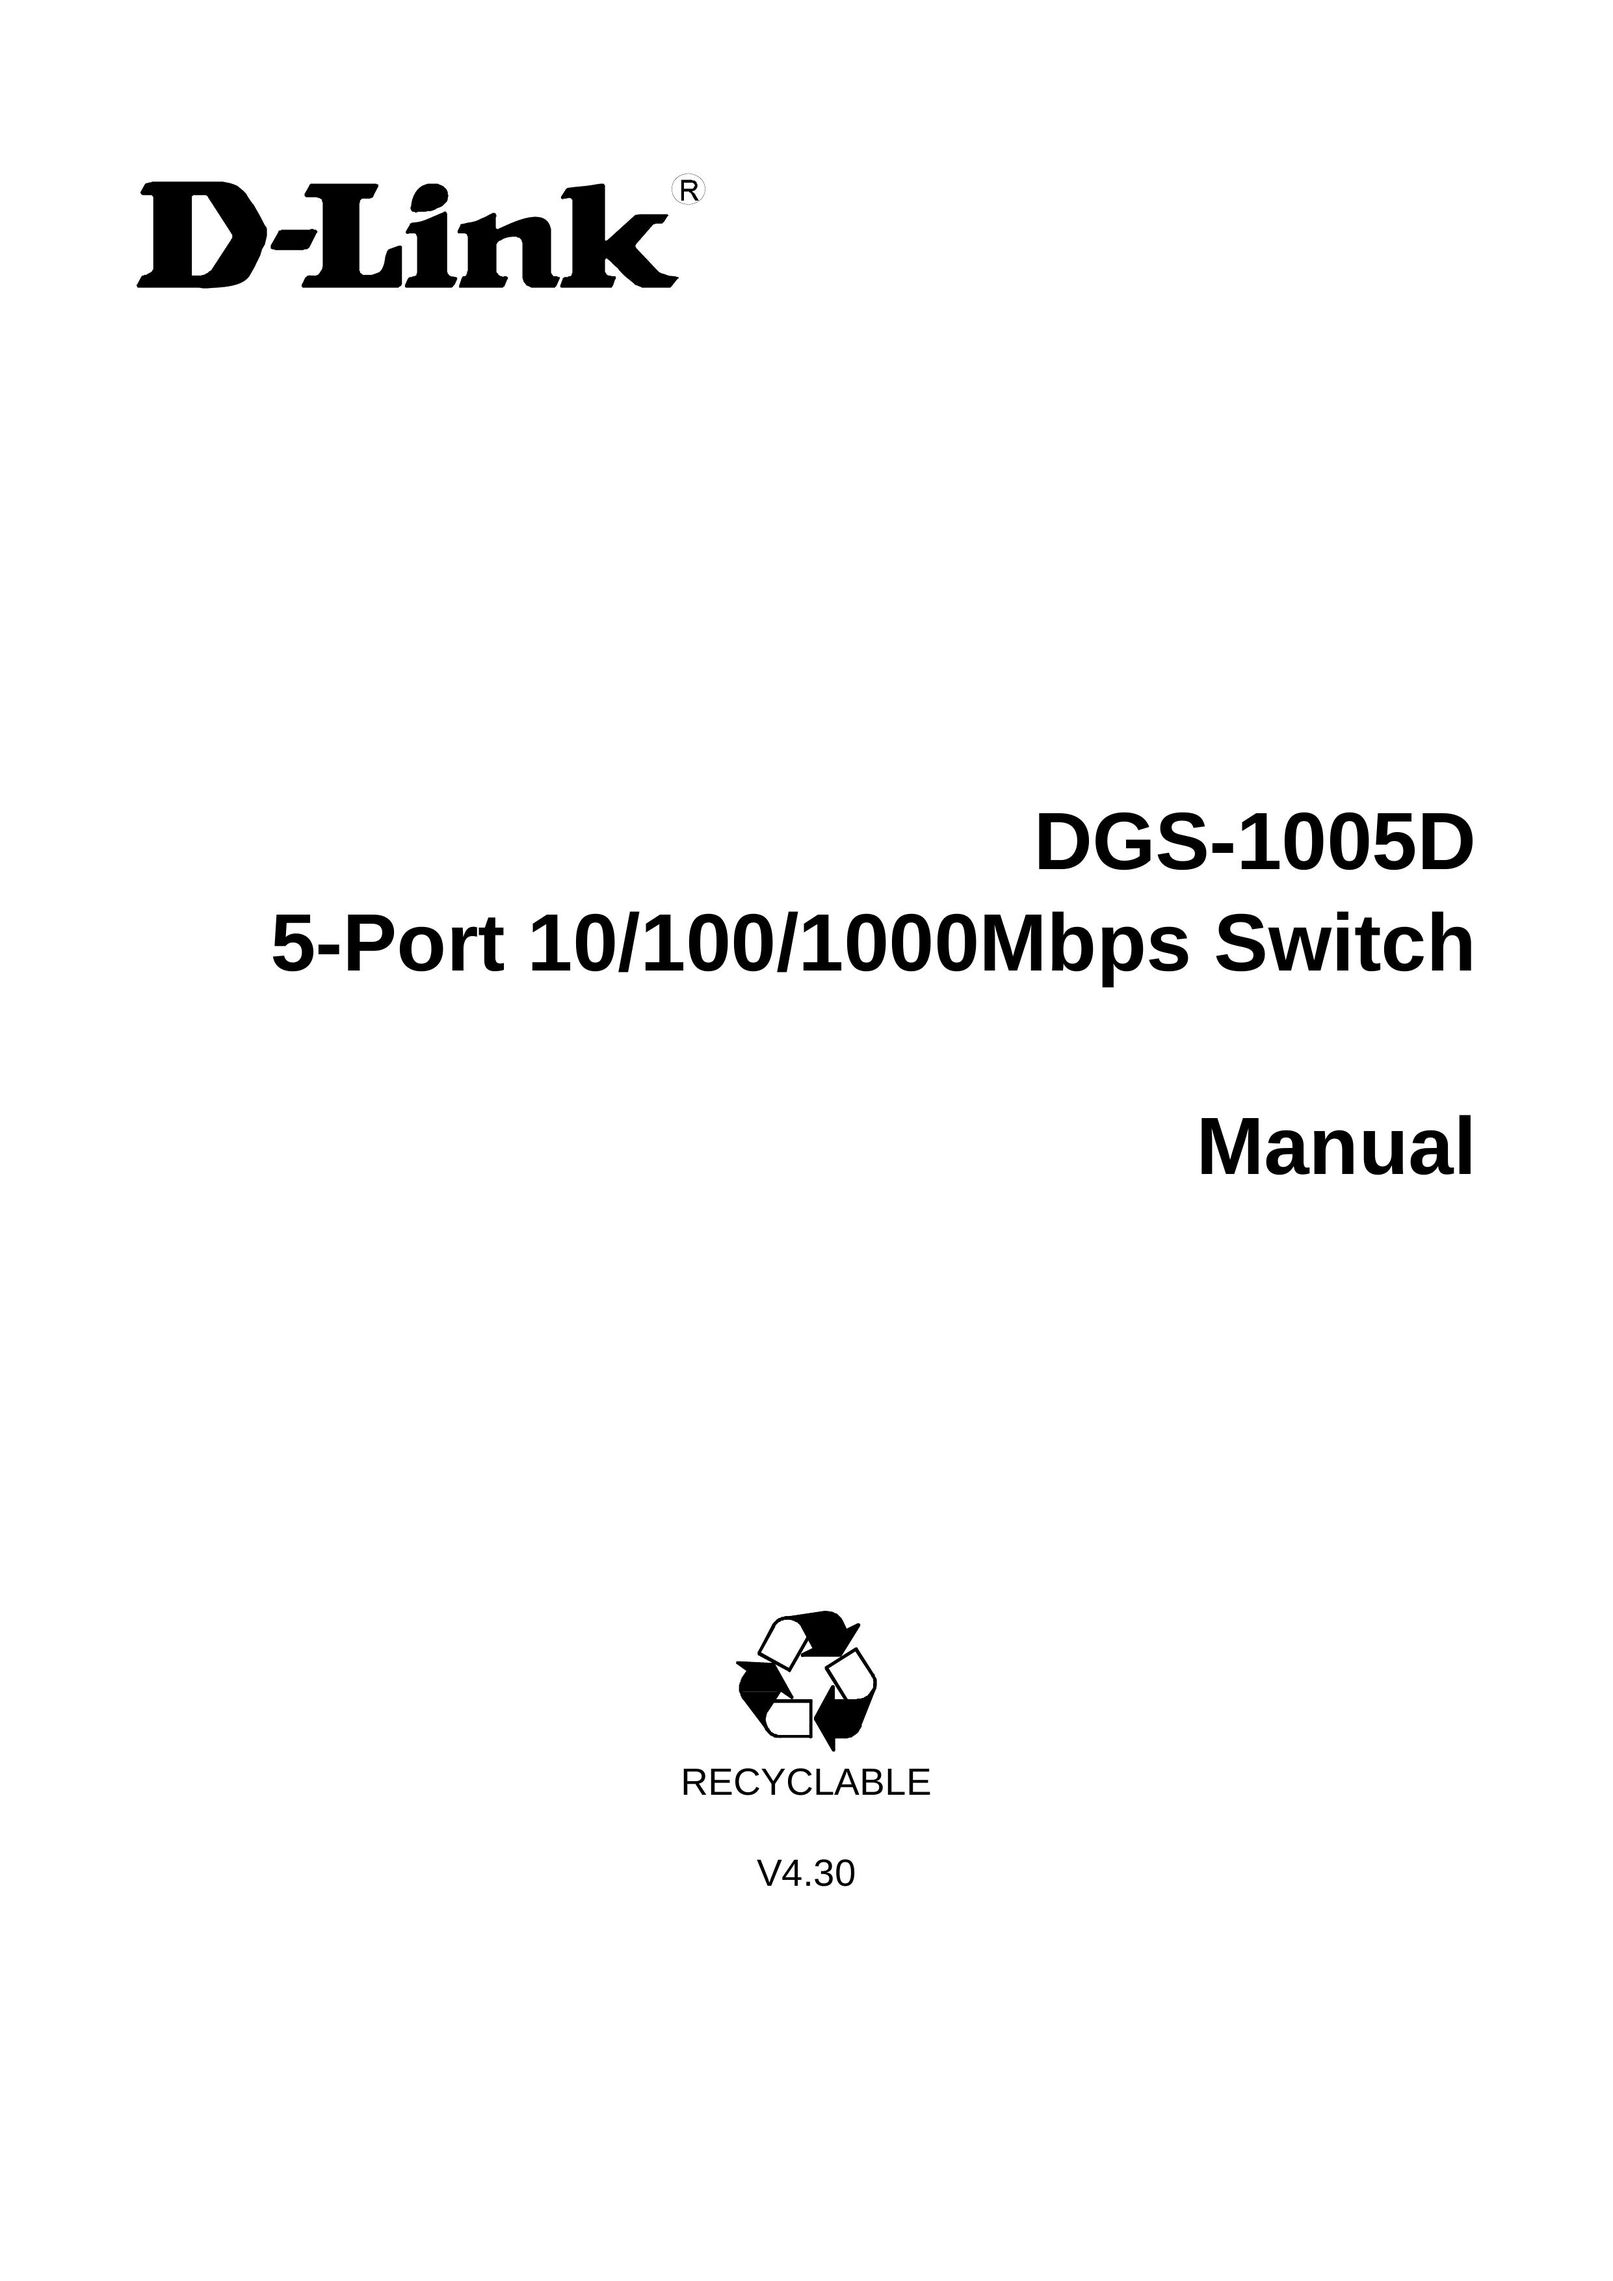 D-Link DGS-1005D Modem User Manual